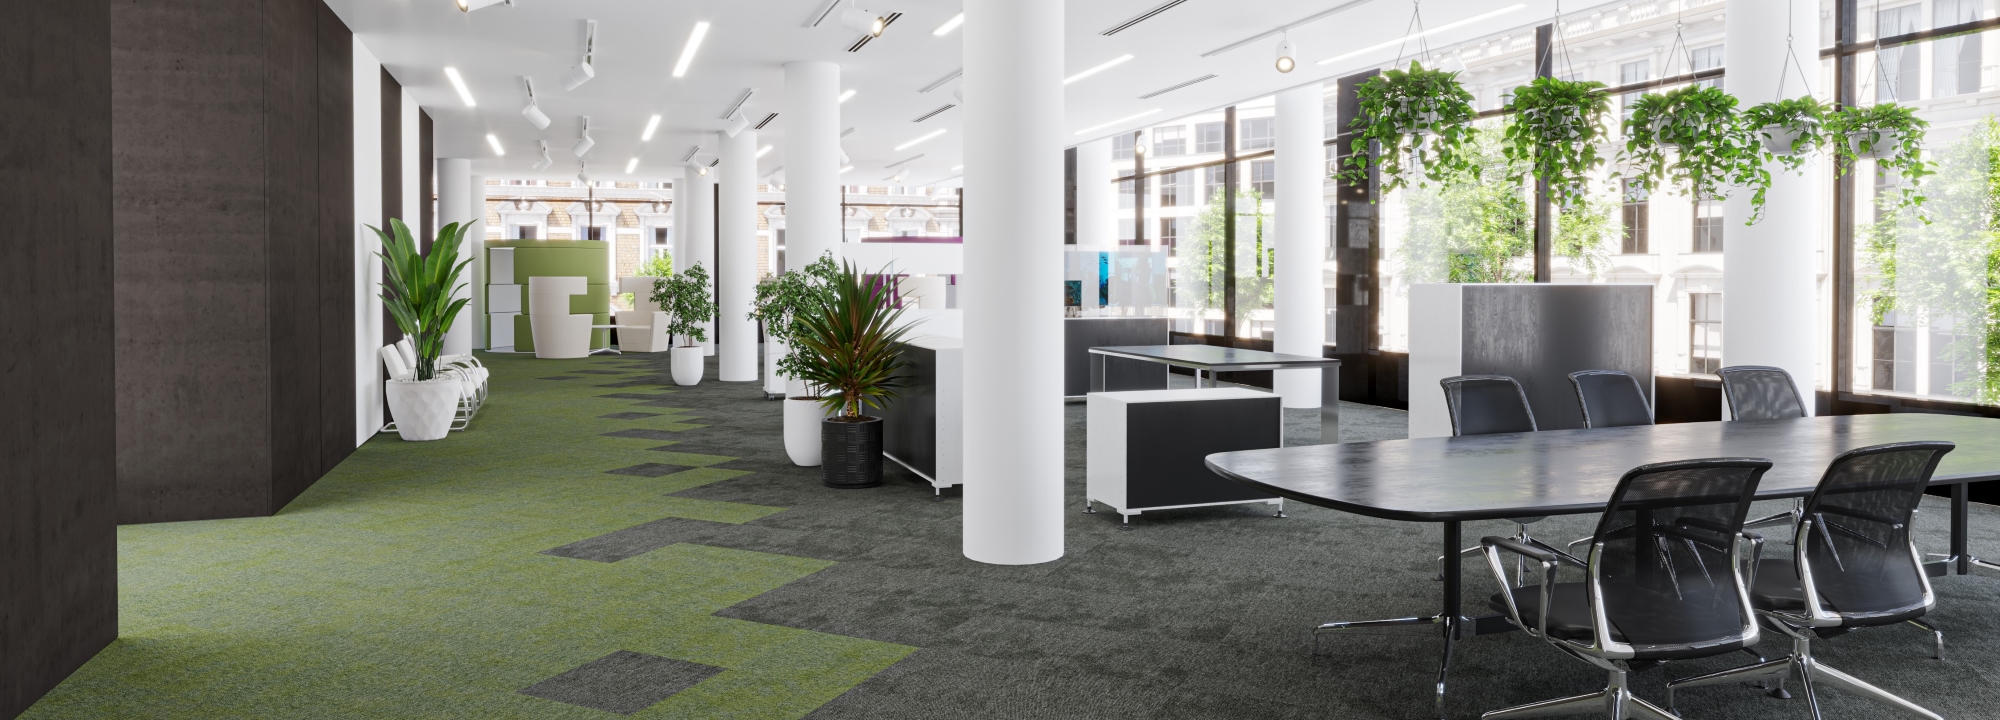 Carpet Tiles in a modern office